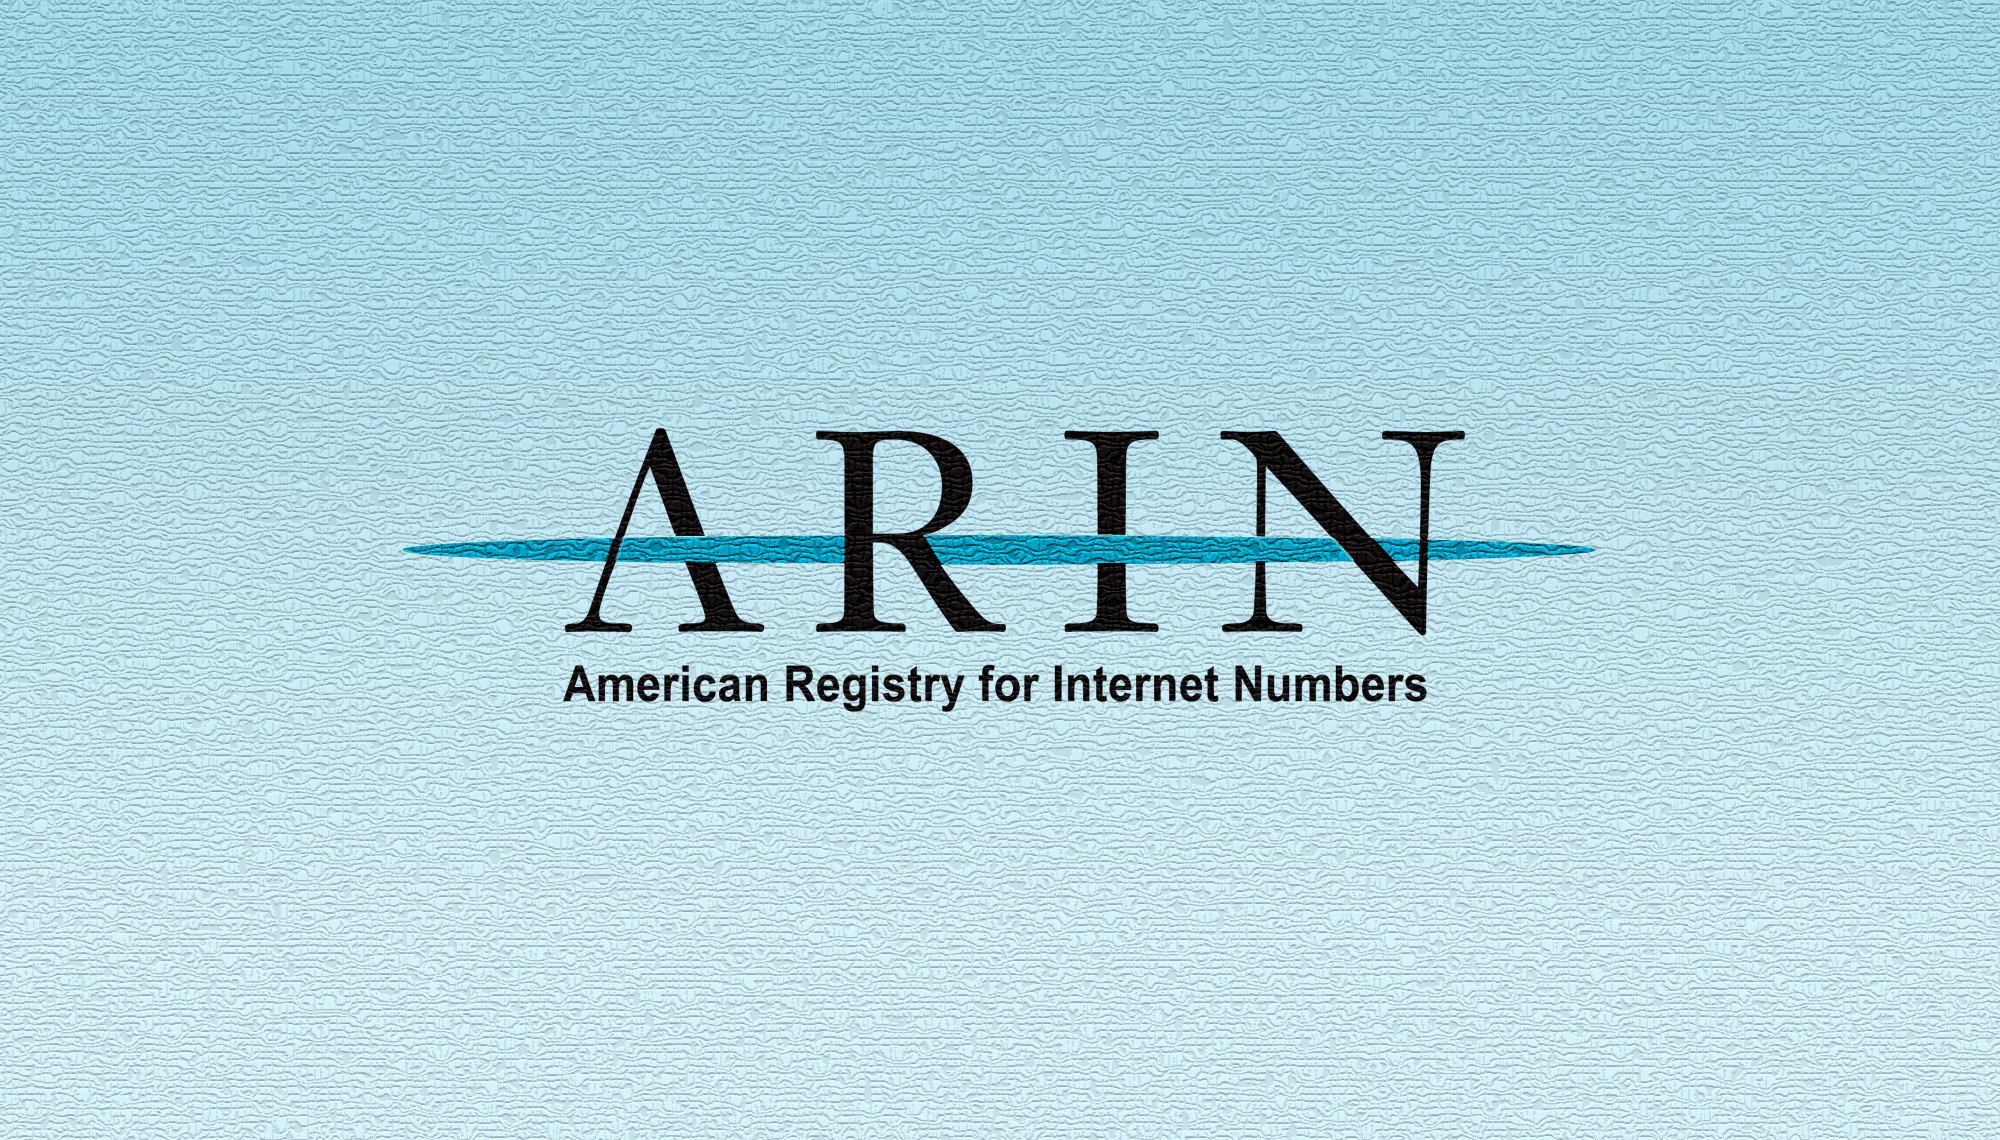 Inside Look at the ARIN Fellowship Program